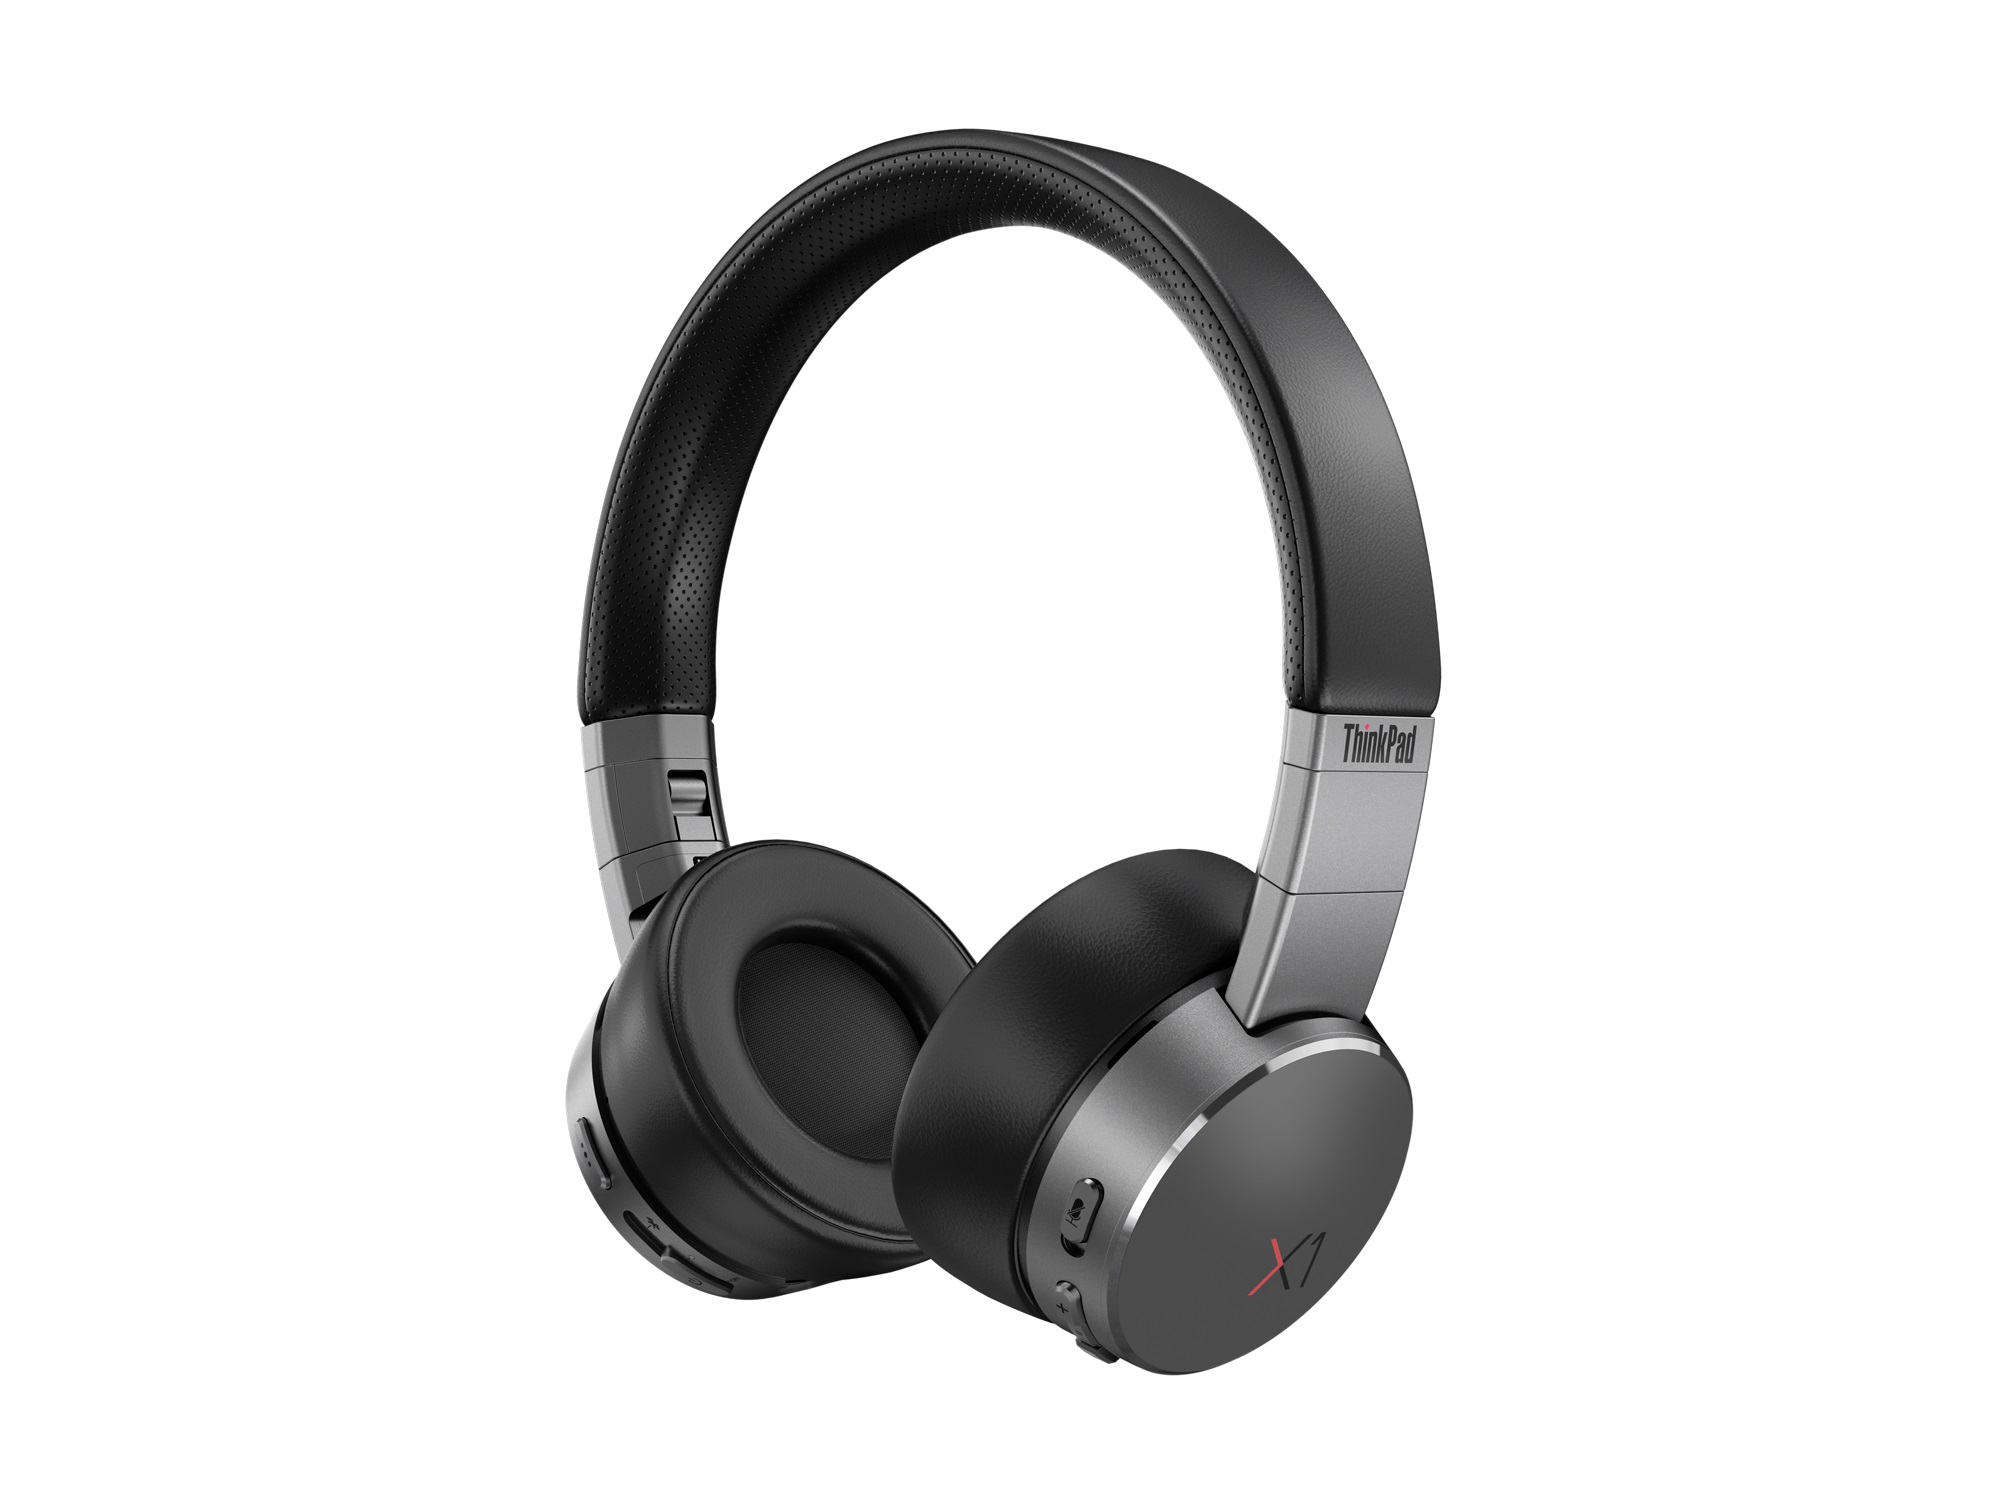 LENOVO sluchátka ThinkPad X1 Active Noise Cancellation Headphone - bezdrátové sluchátka,mic.,potlačení šumu (ENC),ANC